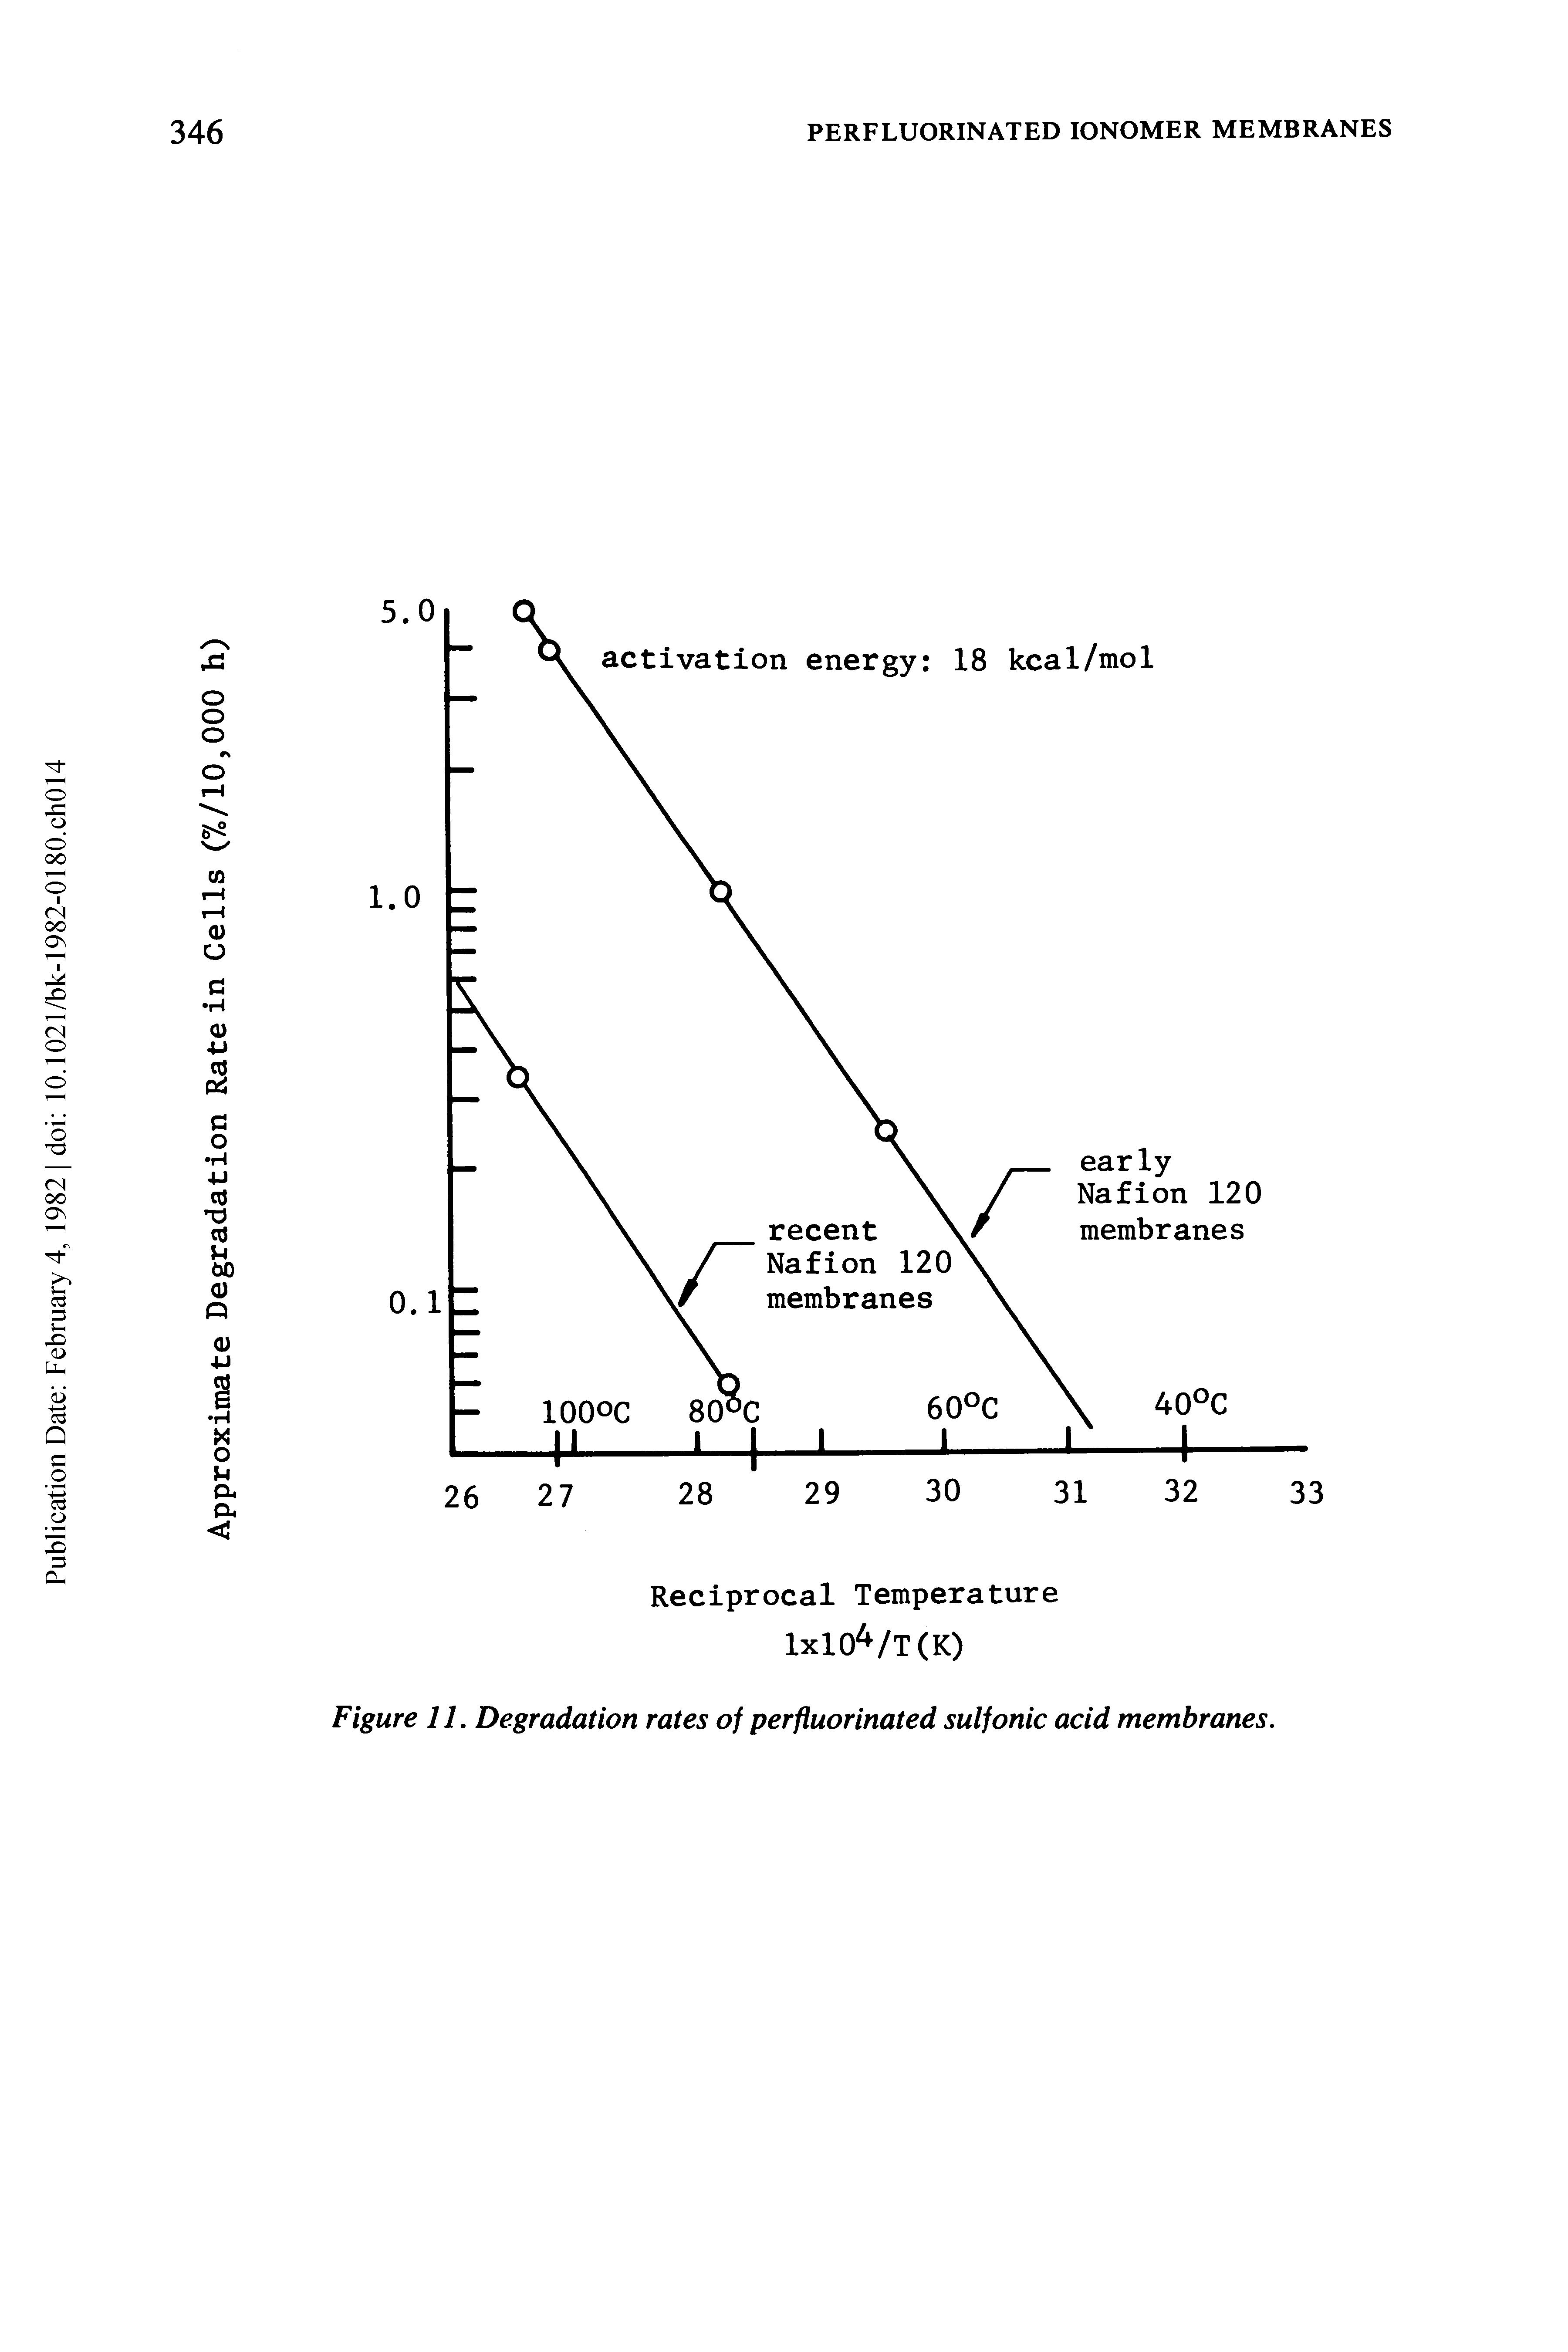 Figure 11. Degradation rates of perfiuorinated sulfonic acid membranes.